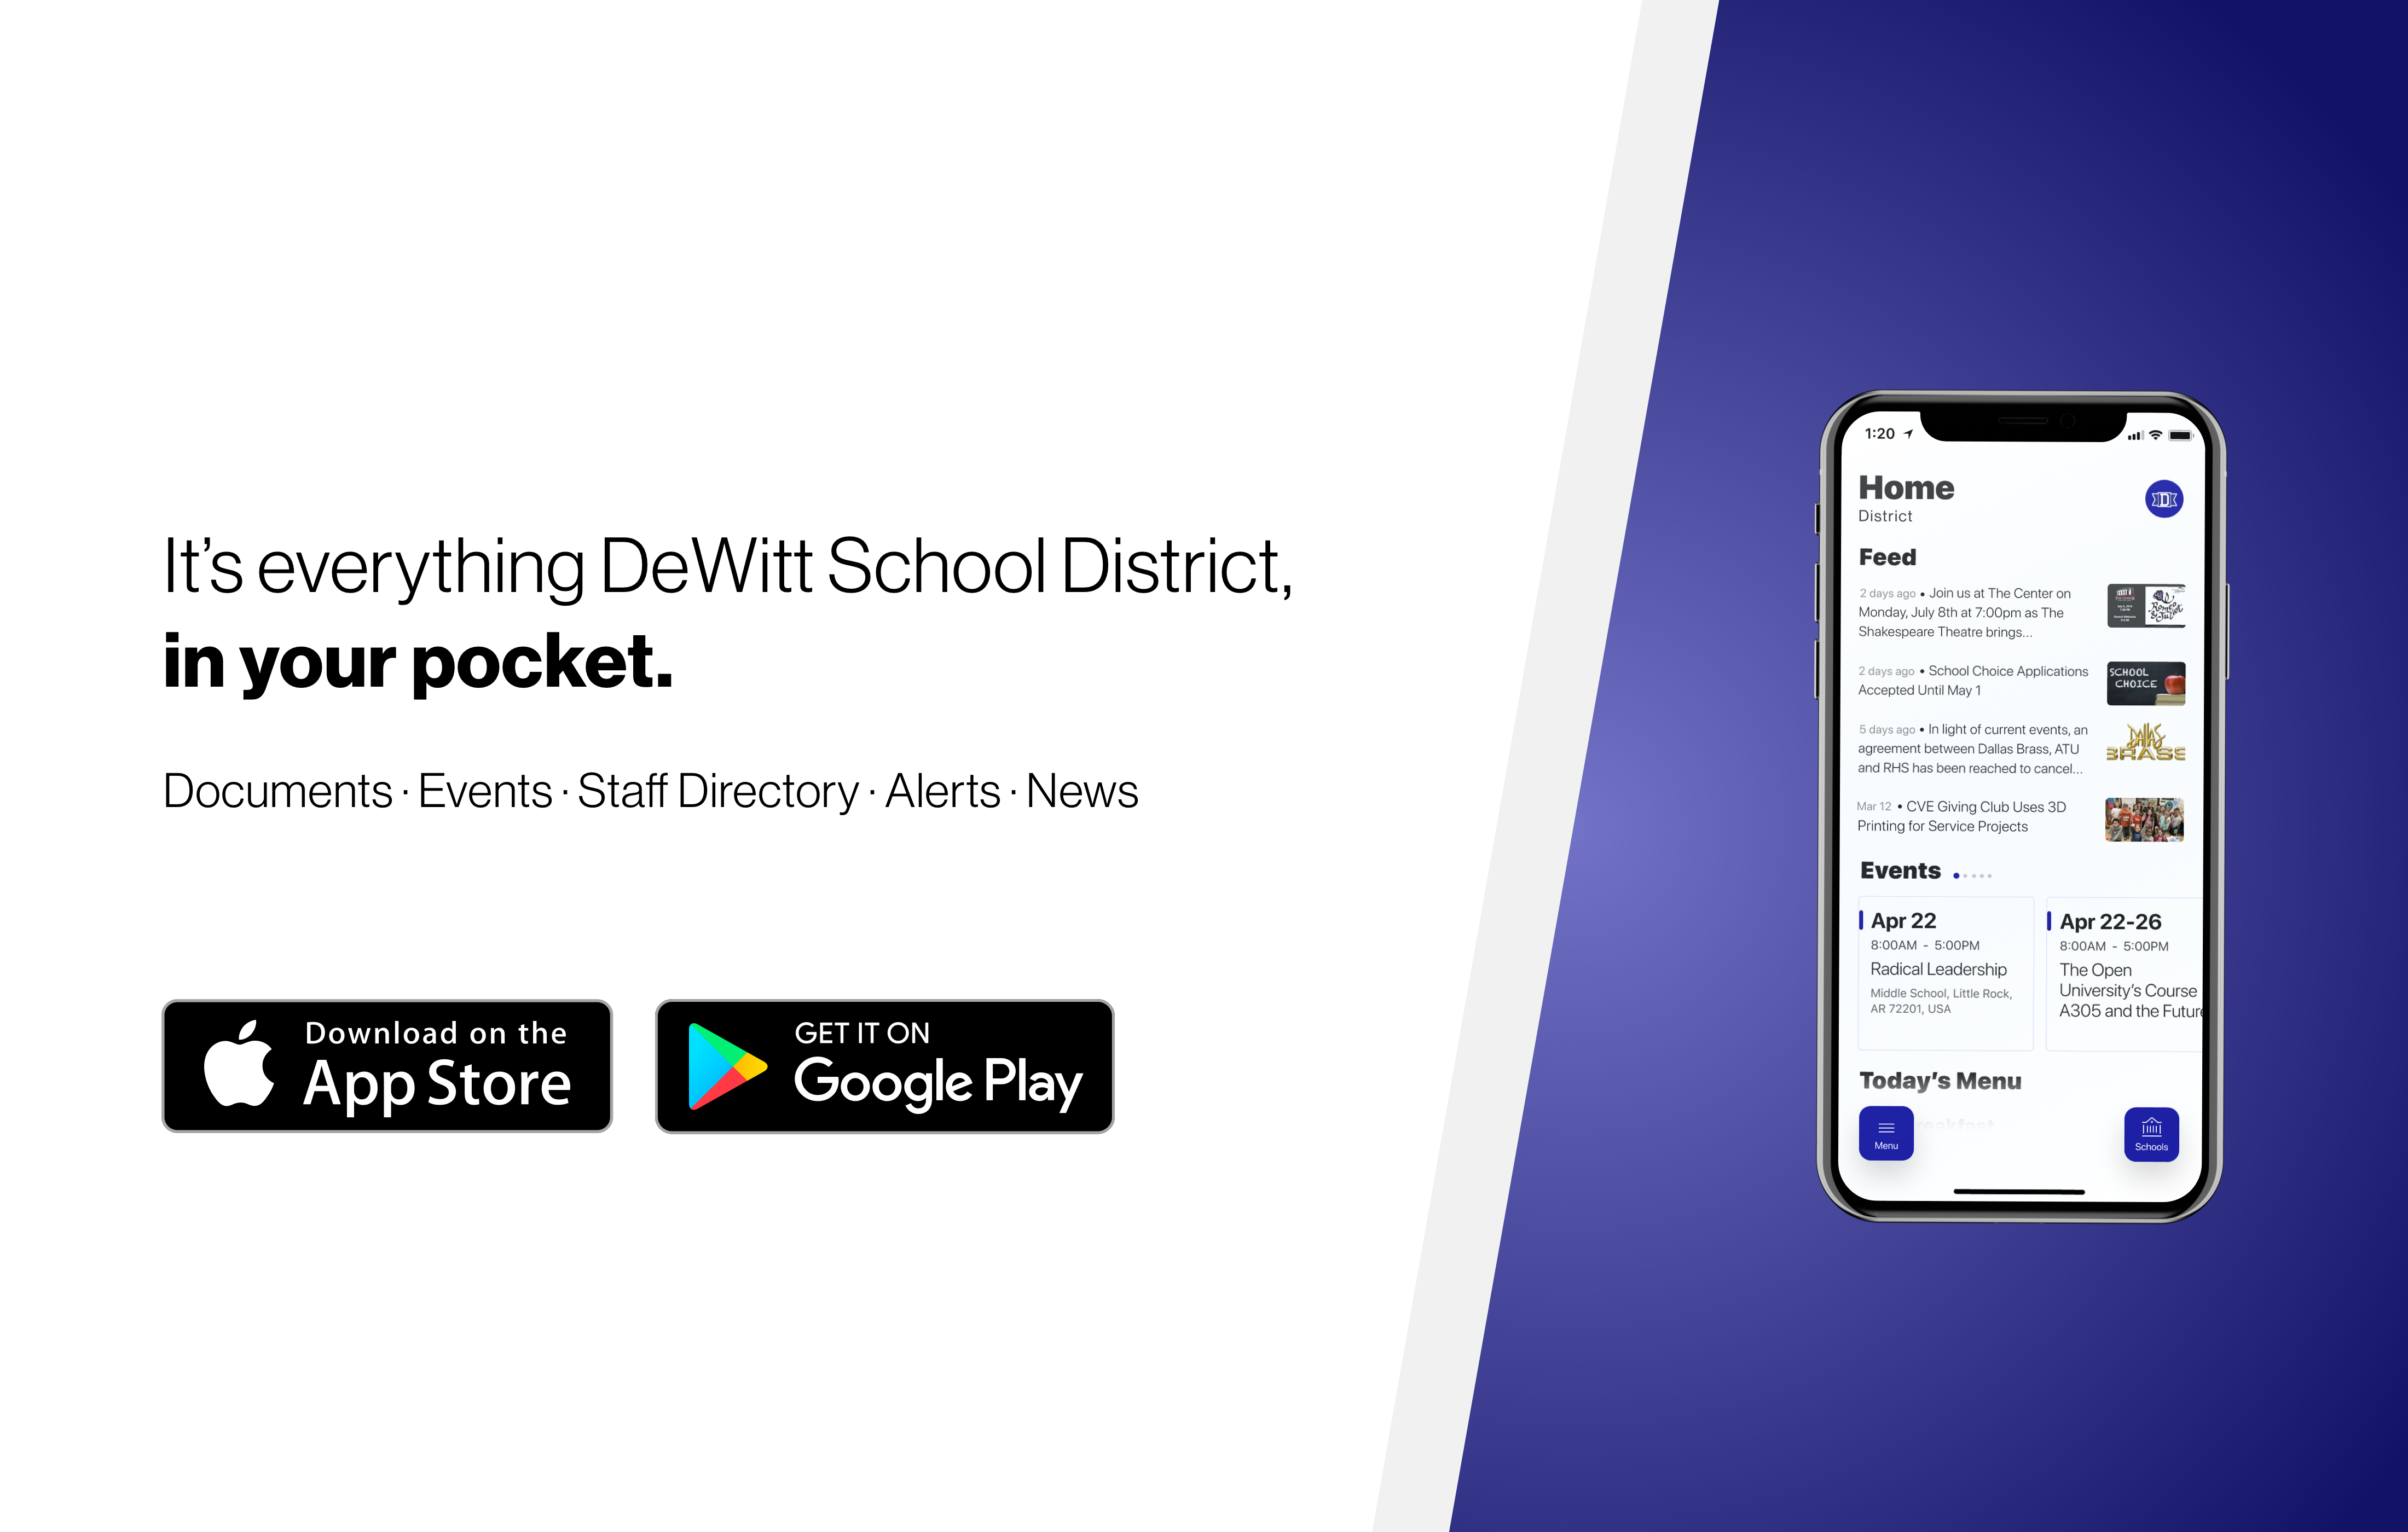 Dewitt School District has a new mobile app